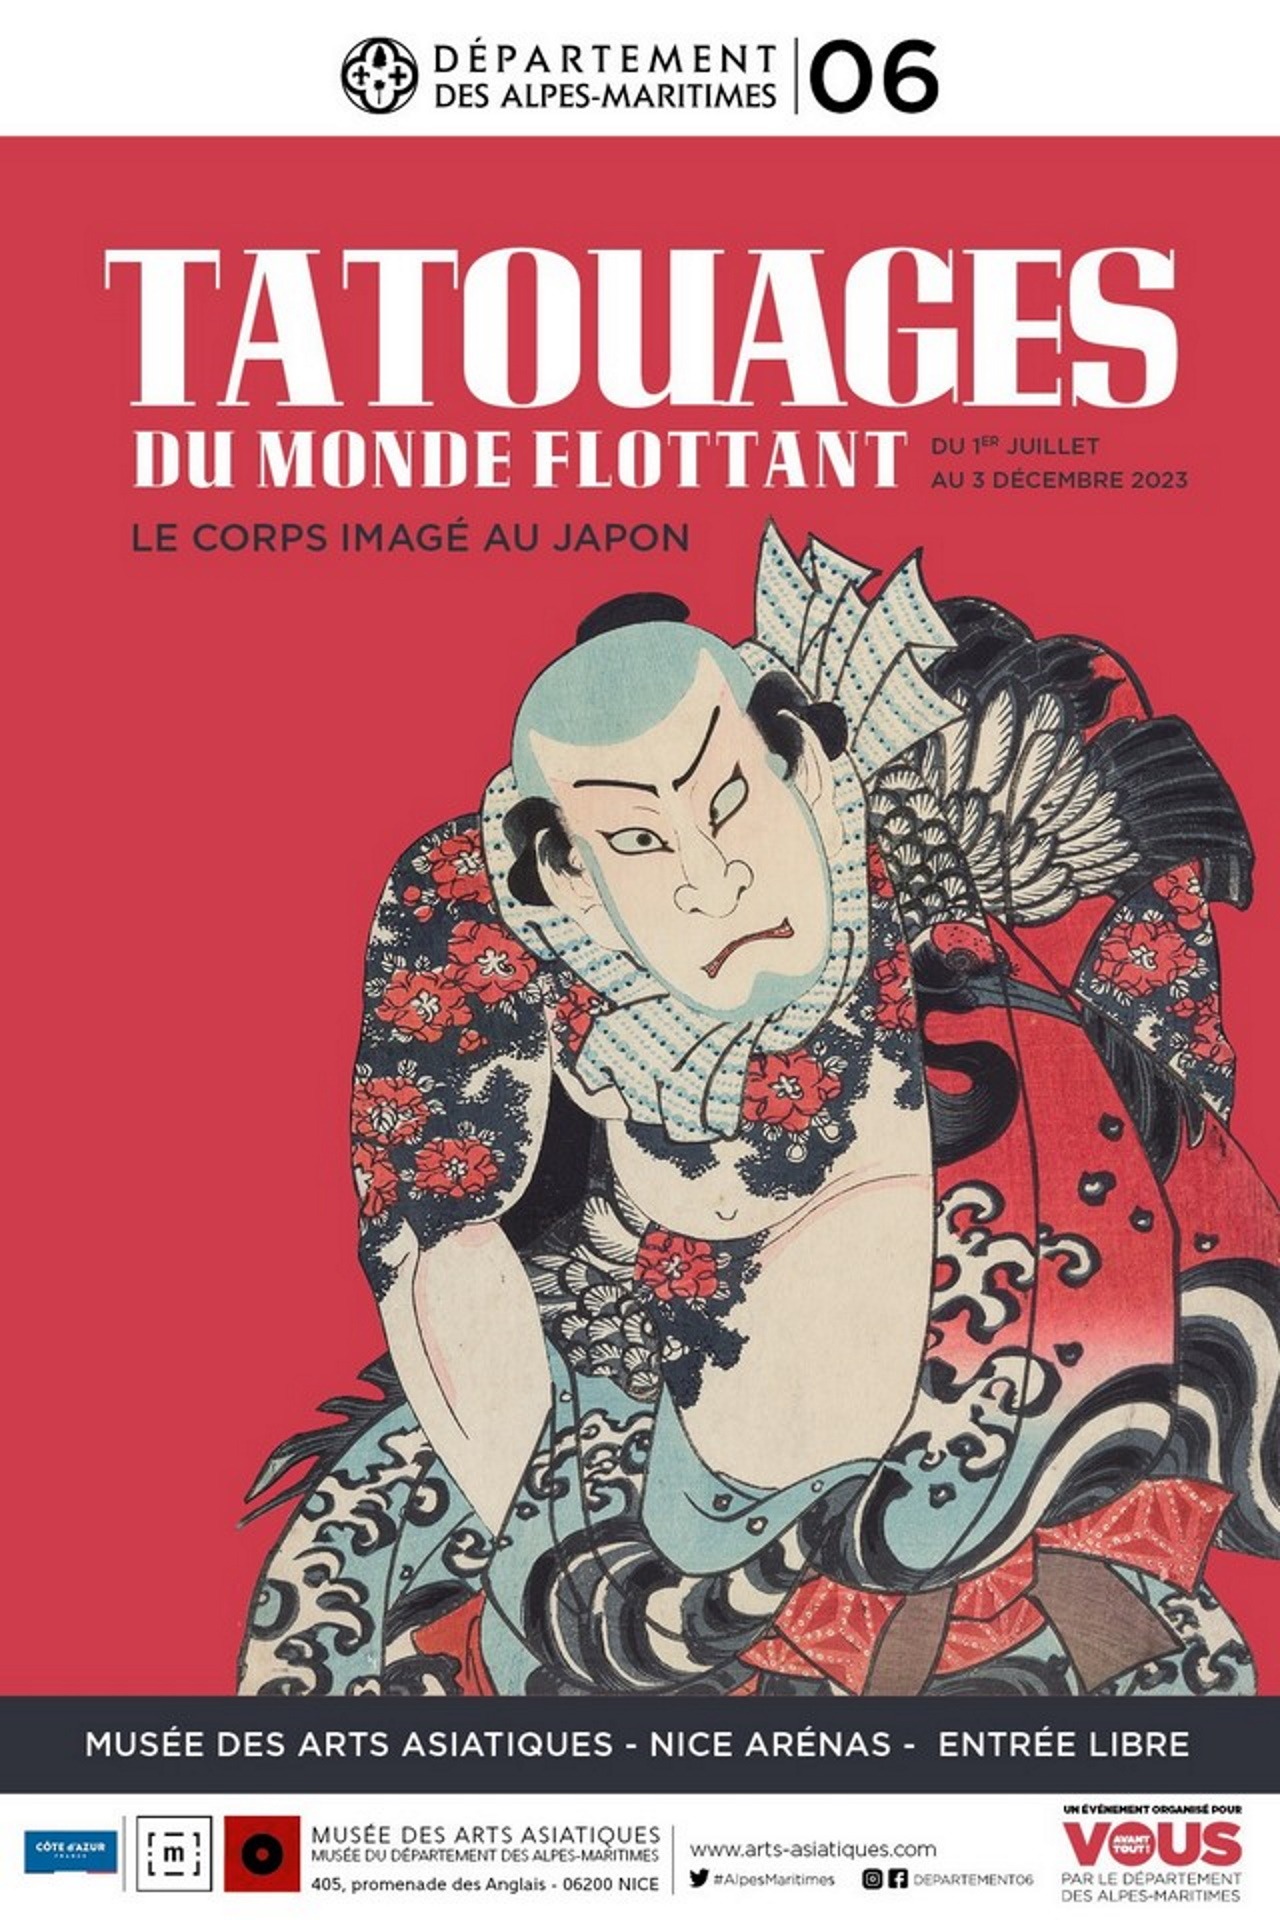 Akimitsu Takagi in the “Tatouages du Monde Flottant” exhibition at the Musée des Arts asiatiques in Nice.